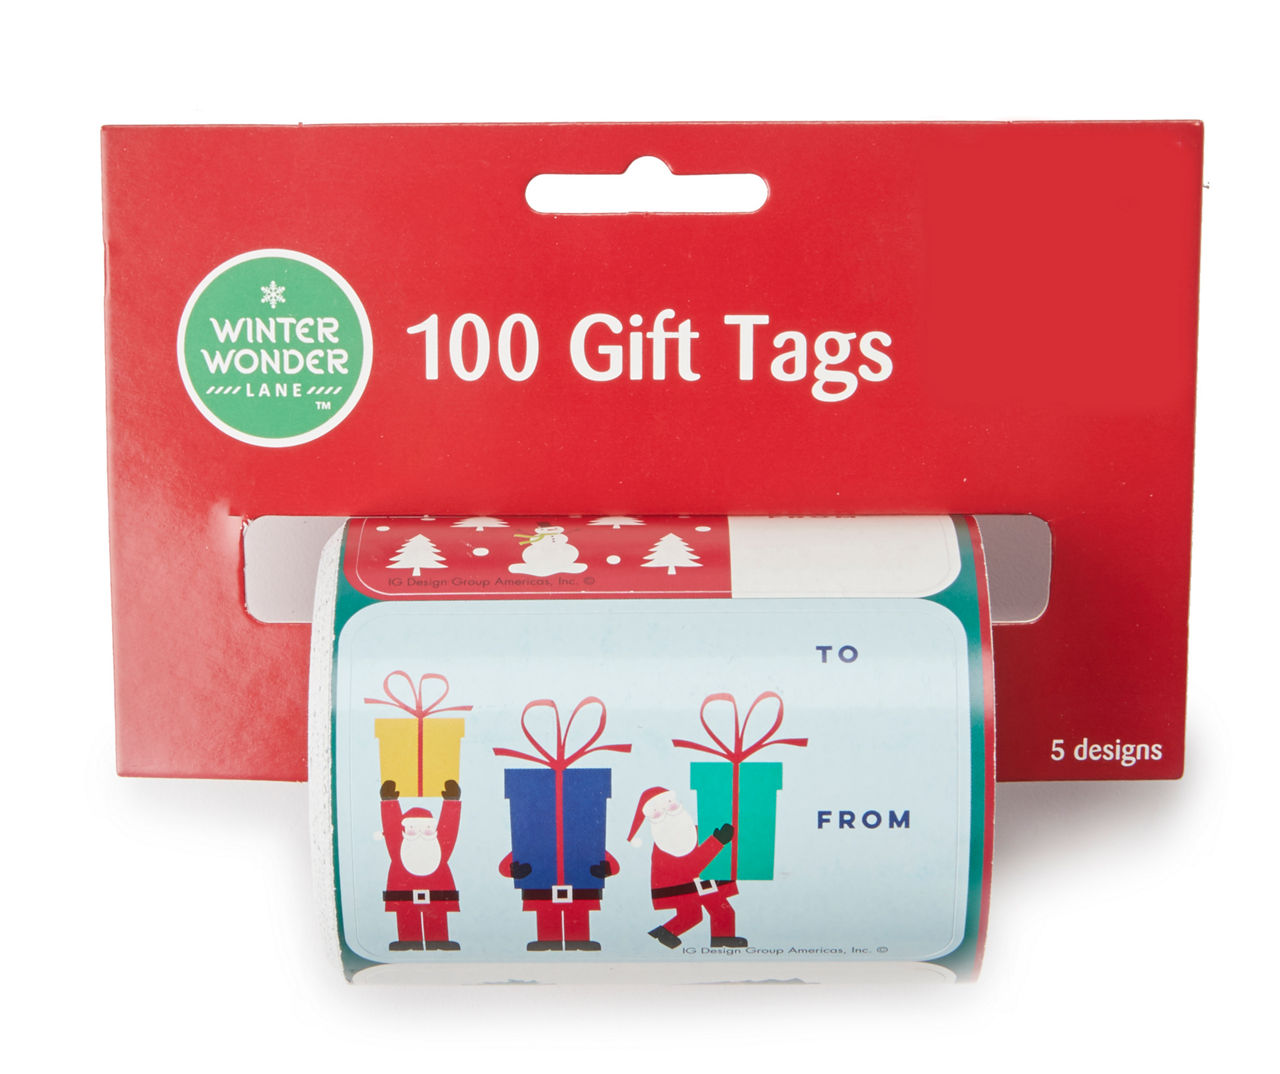 Winter Wonder Lane Whimsical Peel & Stick Gift Tags, 100-Pack